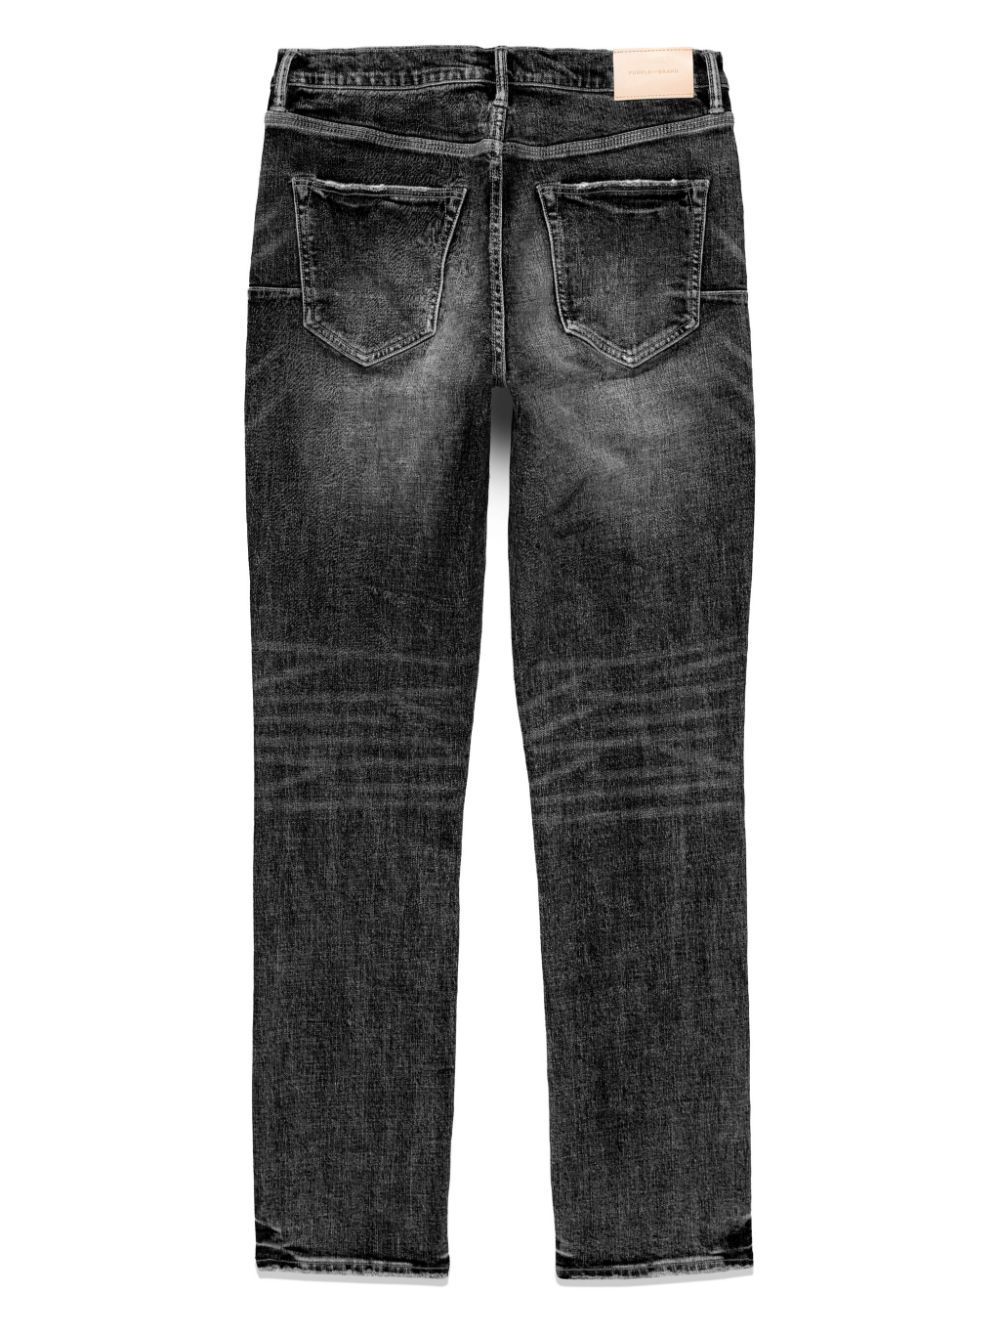 PURPLE BRAND JEANS  Straight leg jeans, Latest fashion design, Jeans brands